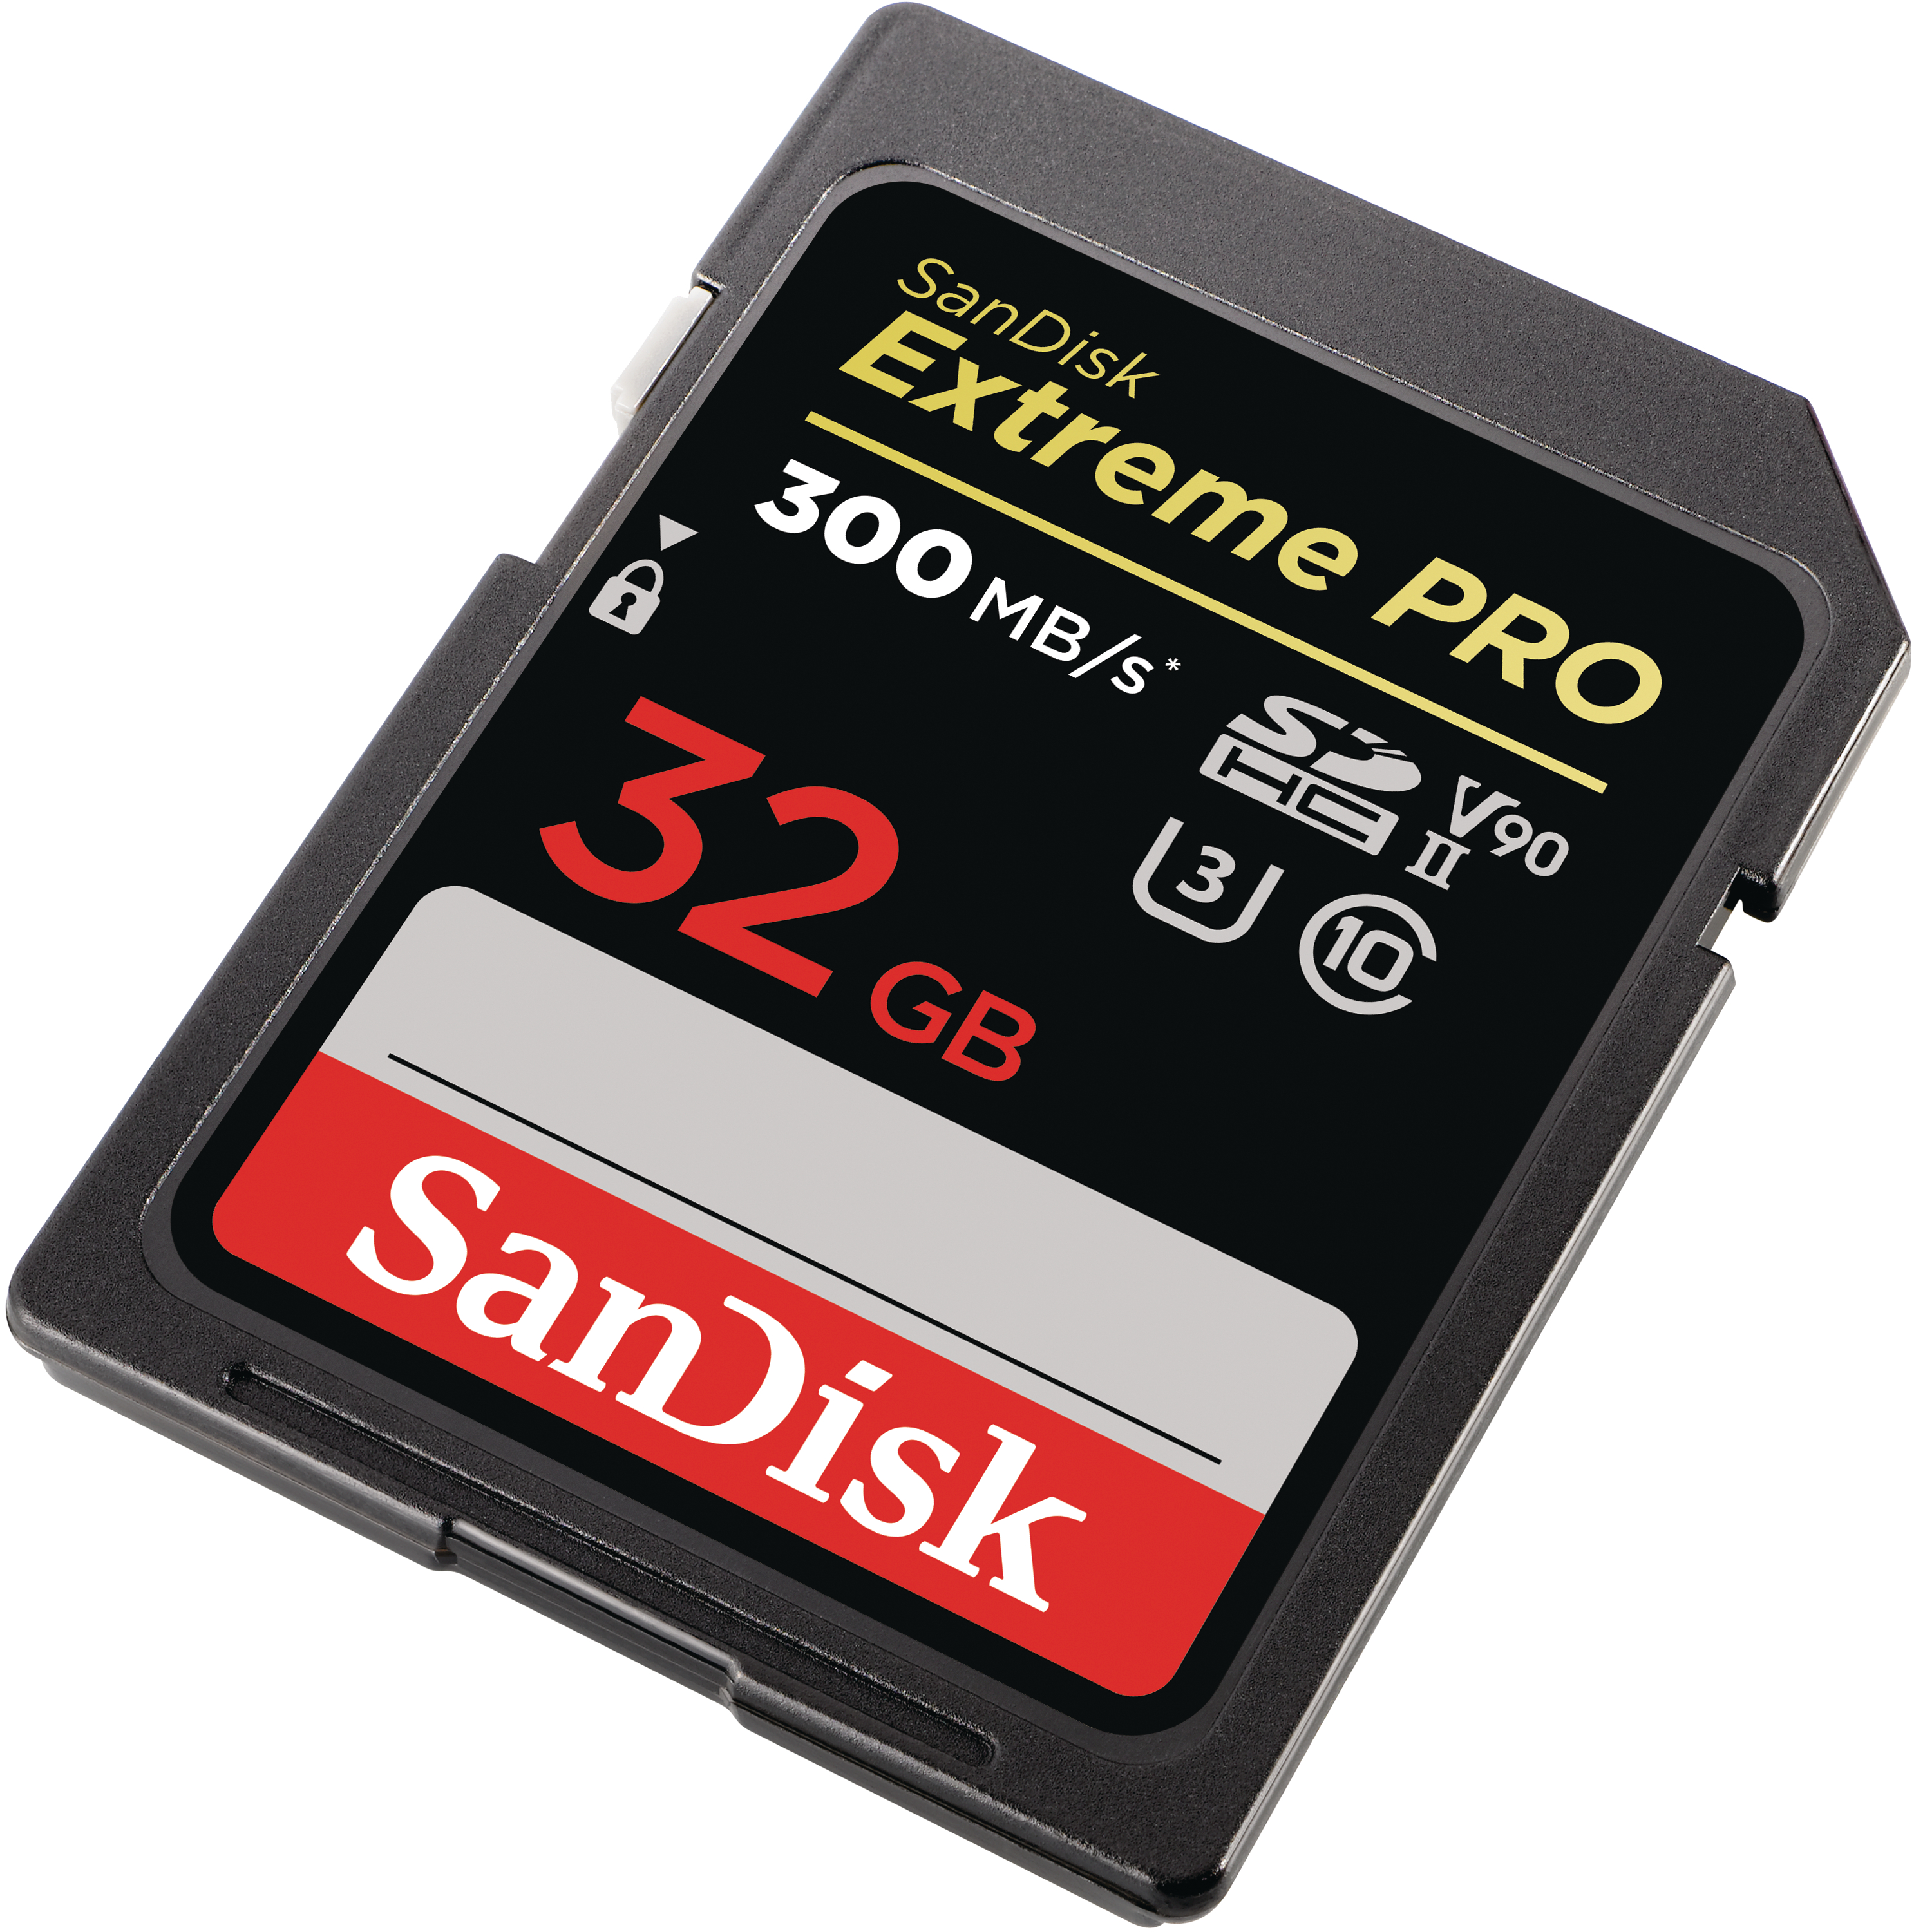 Extreme 300 GB, MB/s SANDISK 32 Speicherkarte, SDHC PRO®,